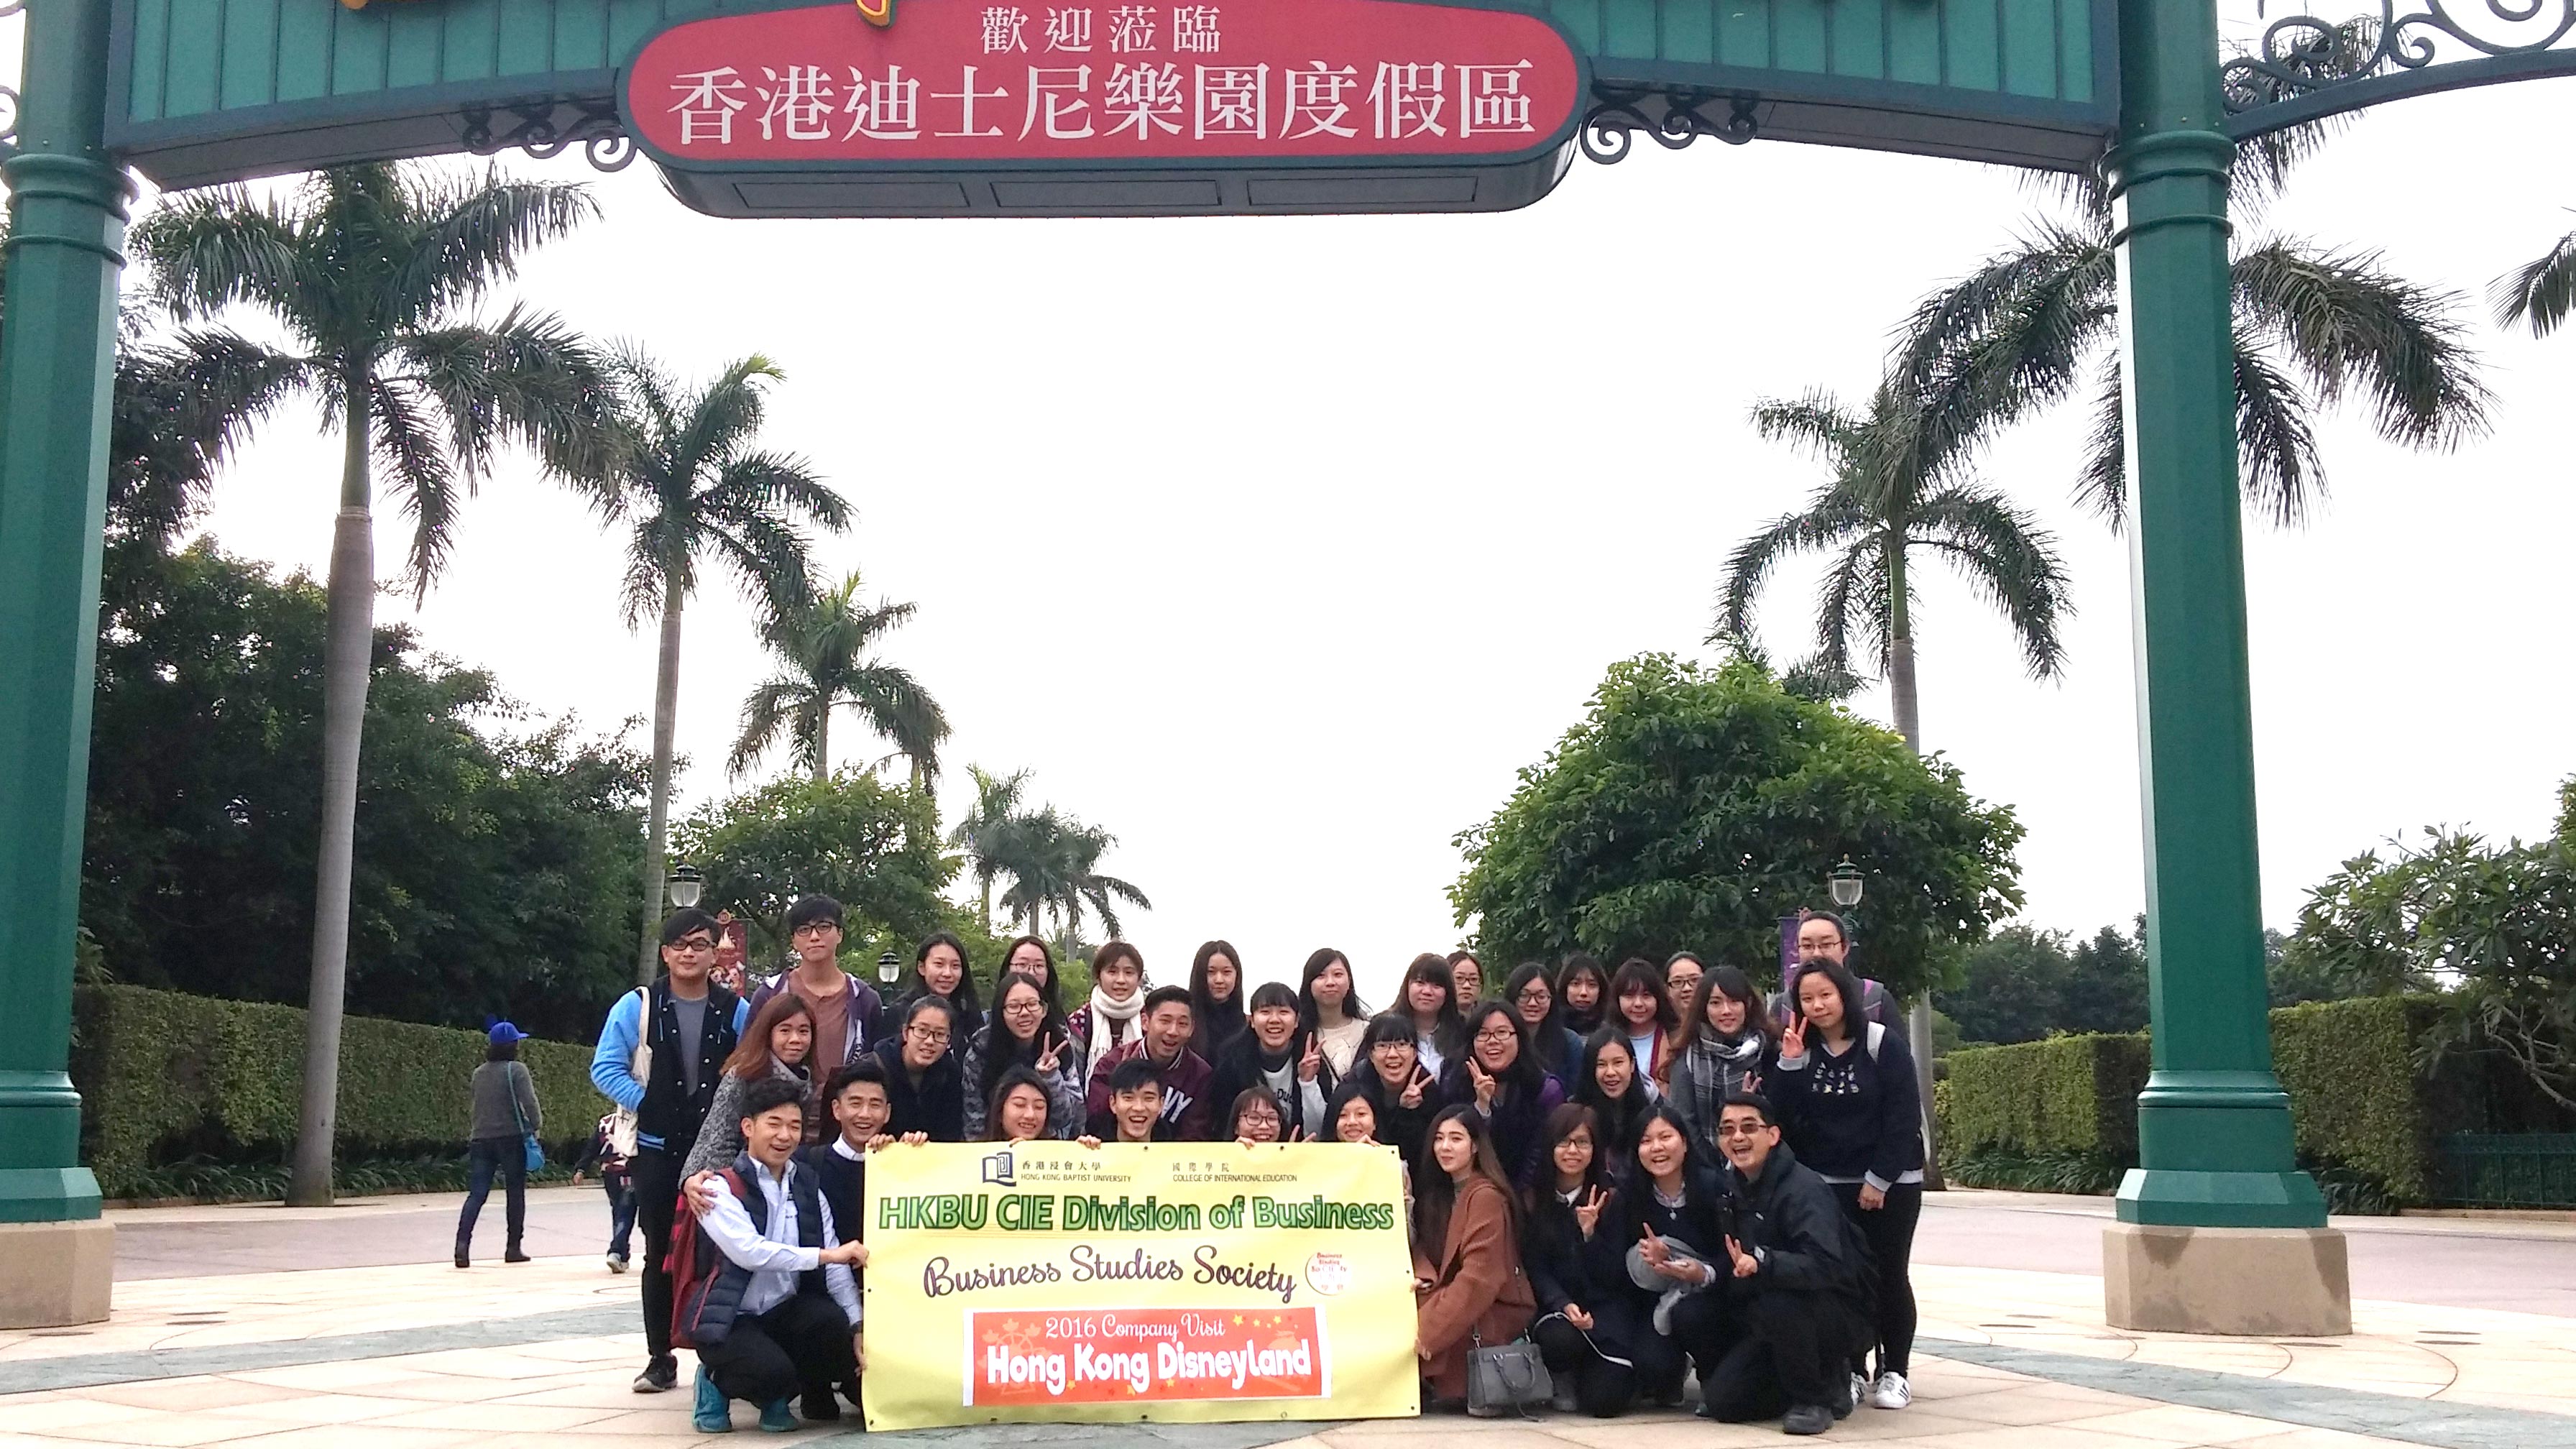 CIE Business Studies Society organises company visit to Hong Kong Disneyland